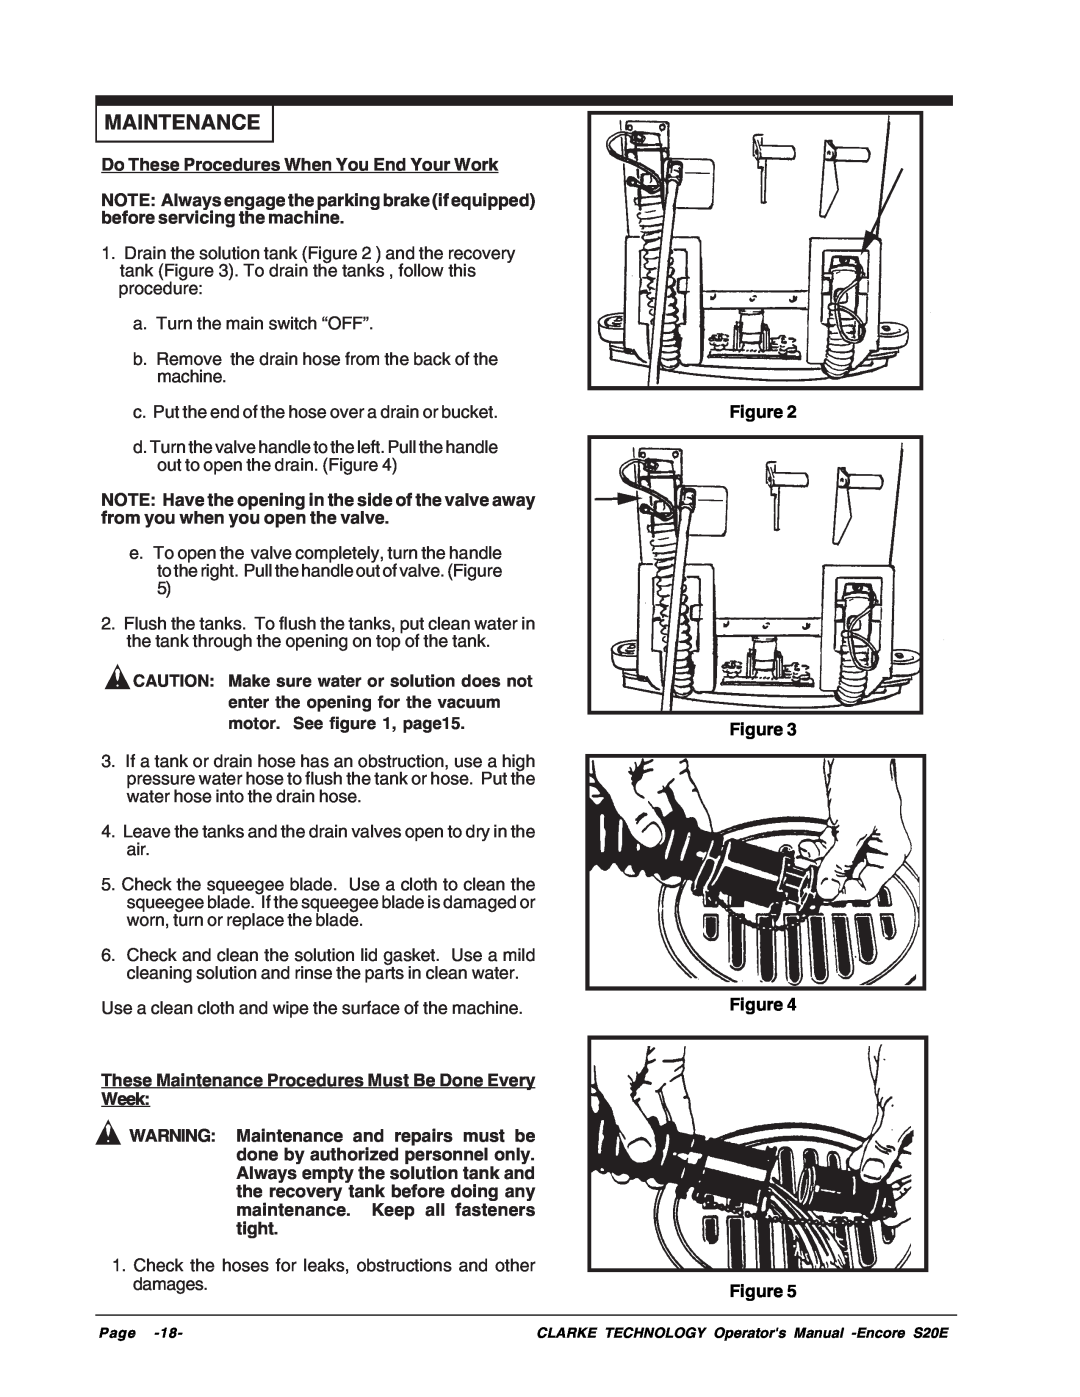 Clarke S20E manual Maintenance, Do These Procedures When You End Your Work, Figure Figure Figure Figure 